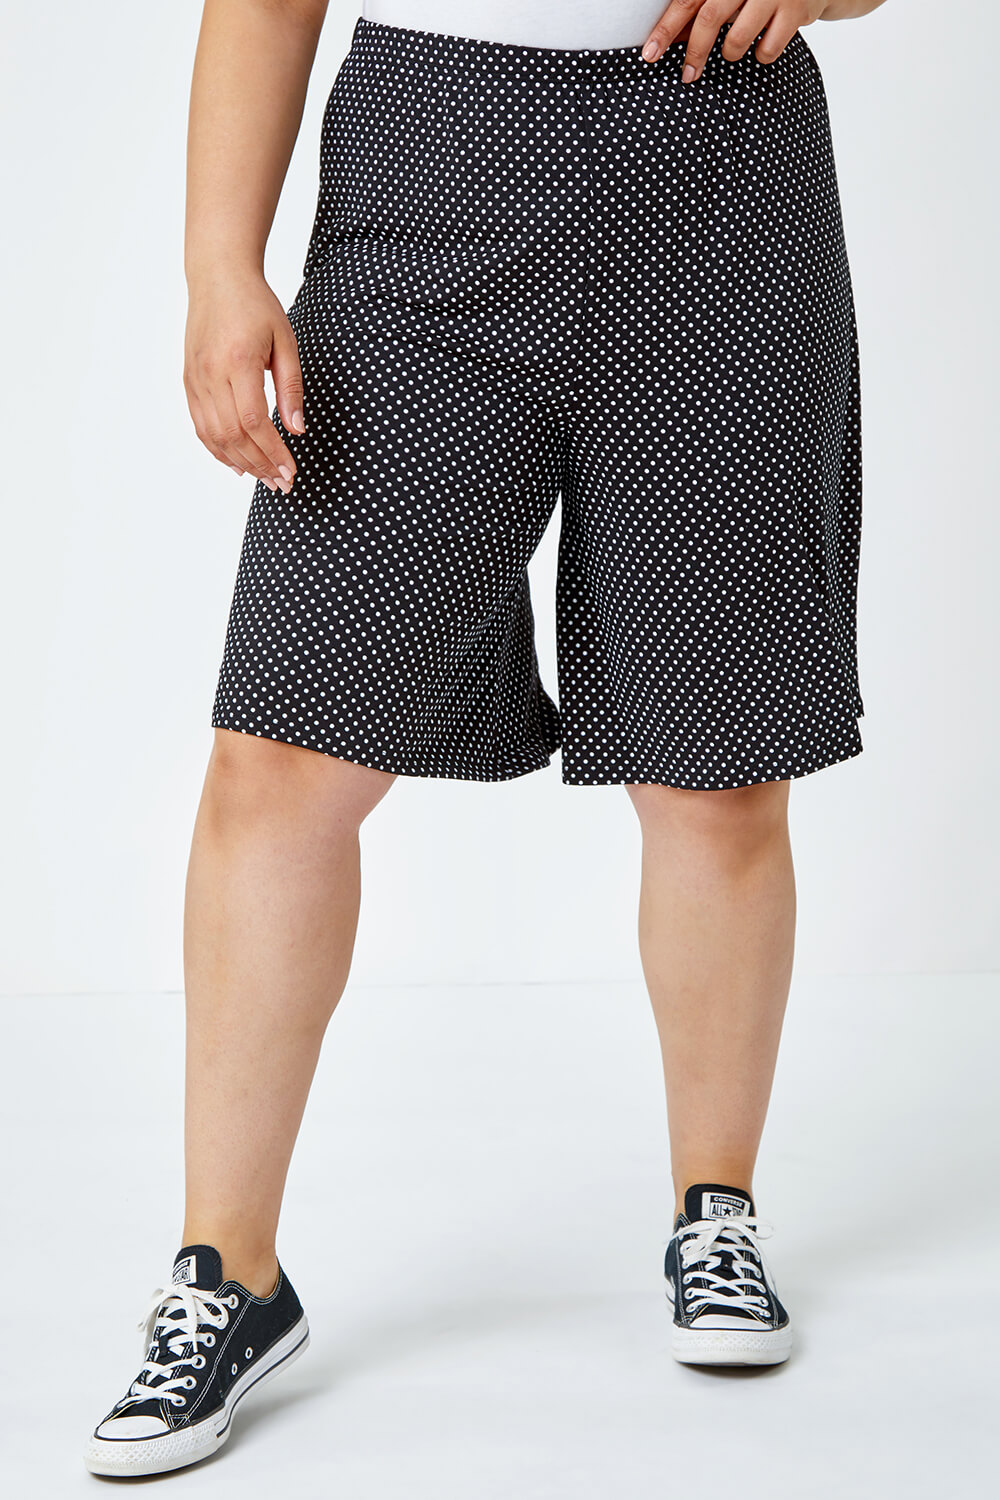 Black Curve Polka Dot Stretch Shorts, Image 4 of 5